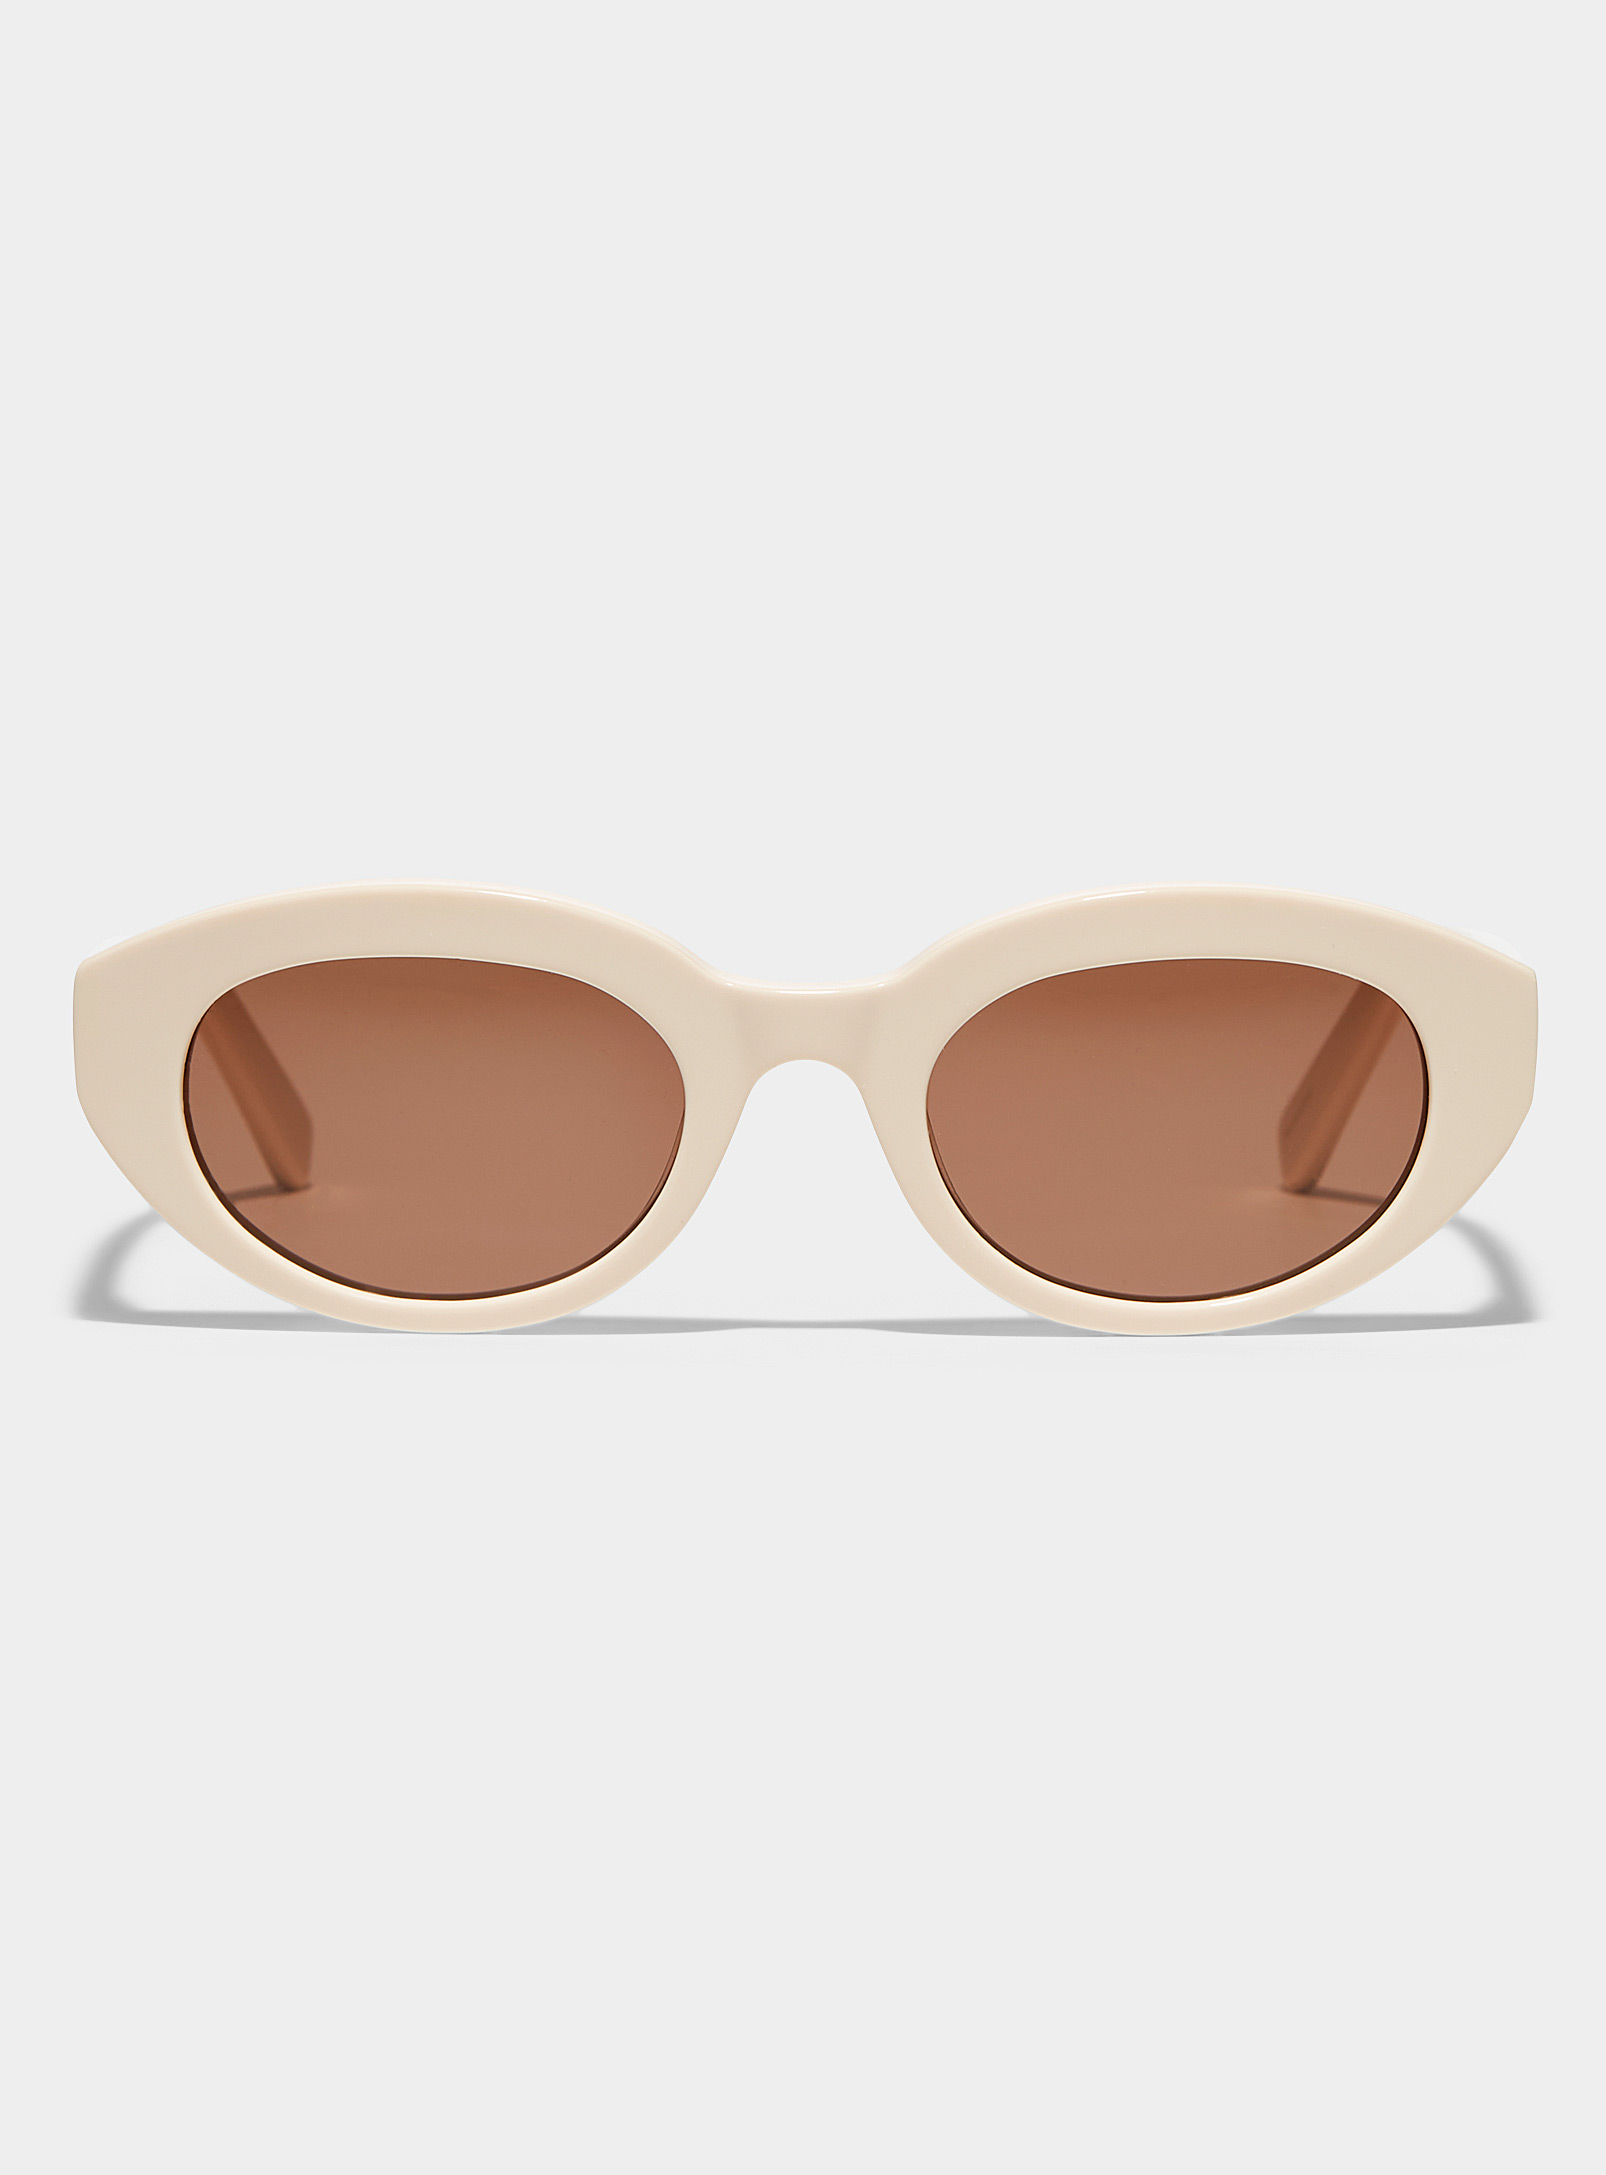 French Kiwis - Women's Monroe oval sunglasses